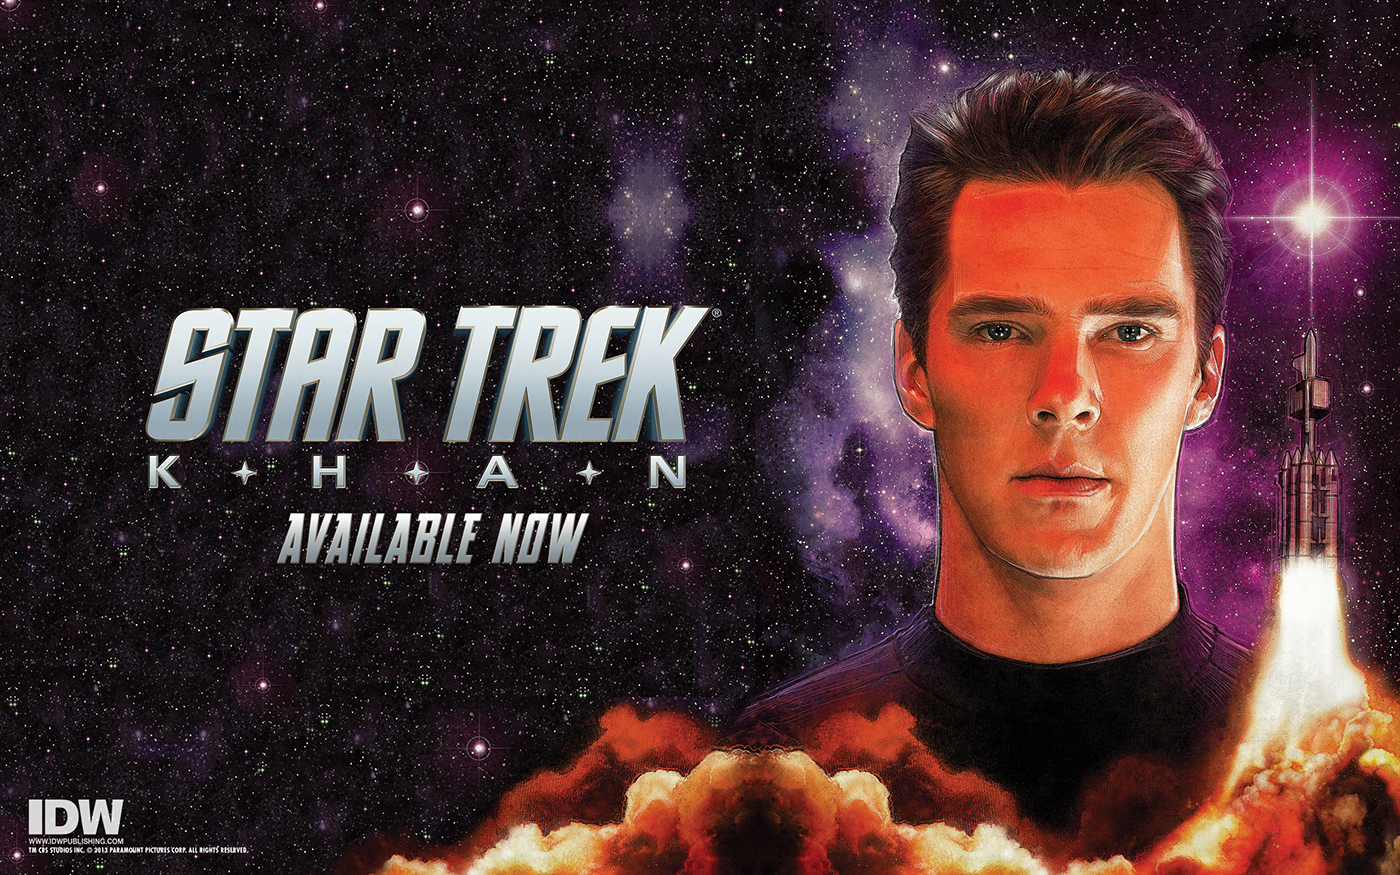 Comic Book Star Trek khan cumberbatch cover art IDW